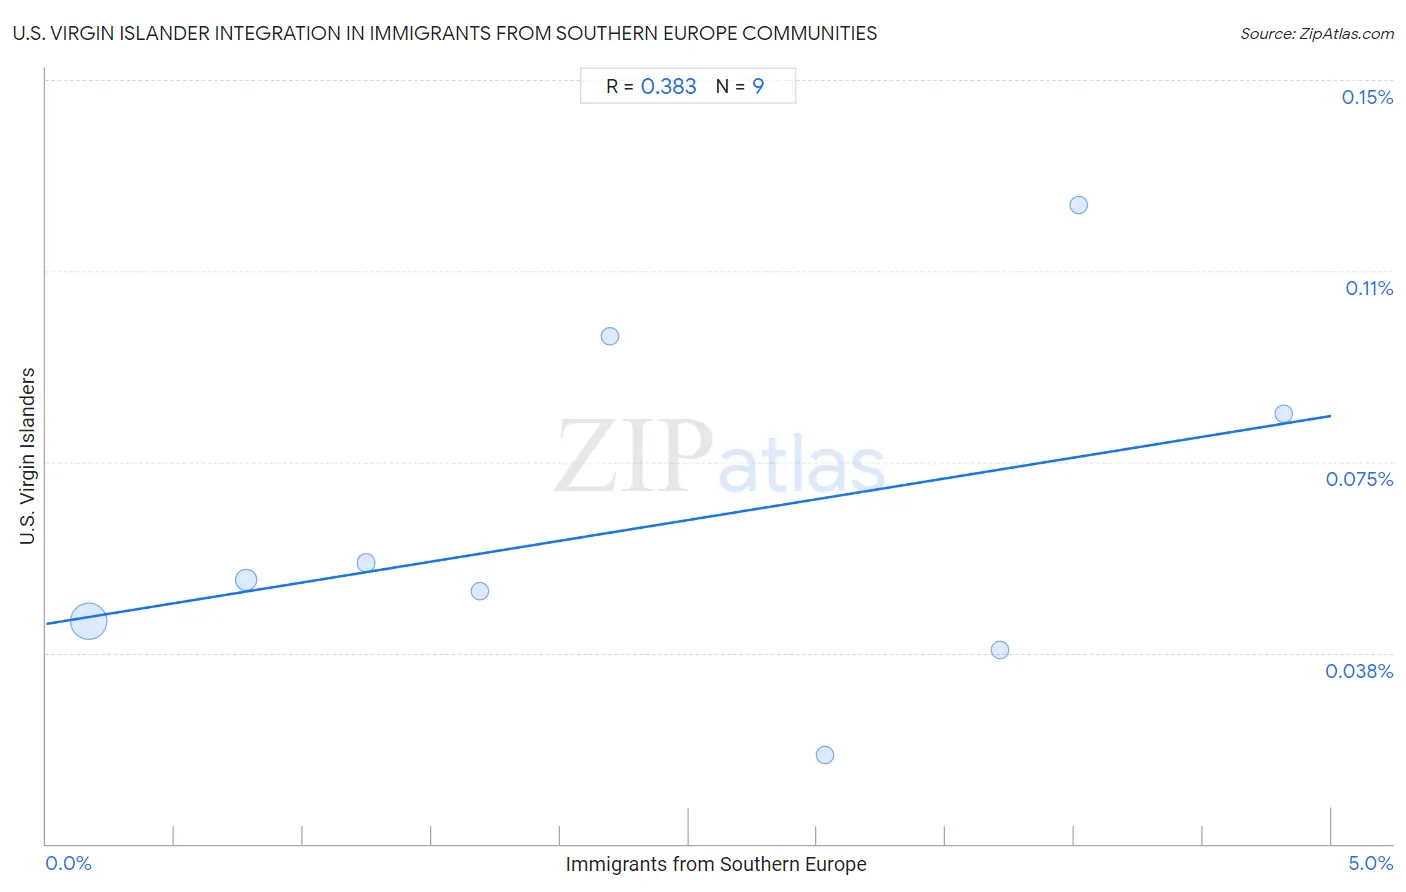 Immigrants from Southern Europe Integration in U.S. Virgin Islander Communities